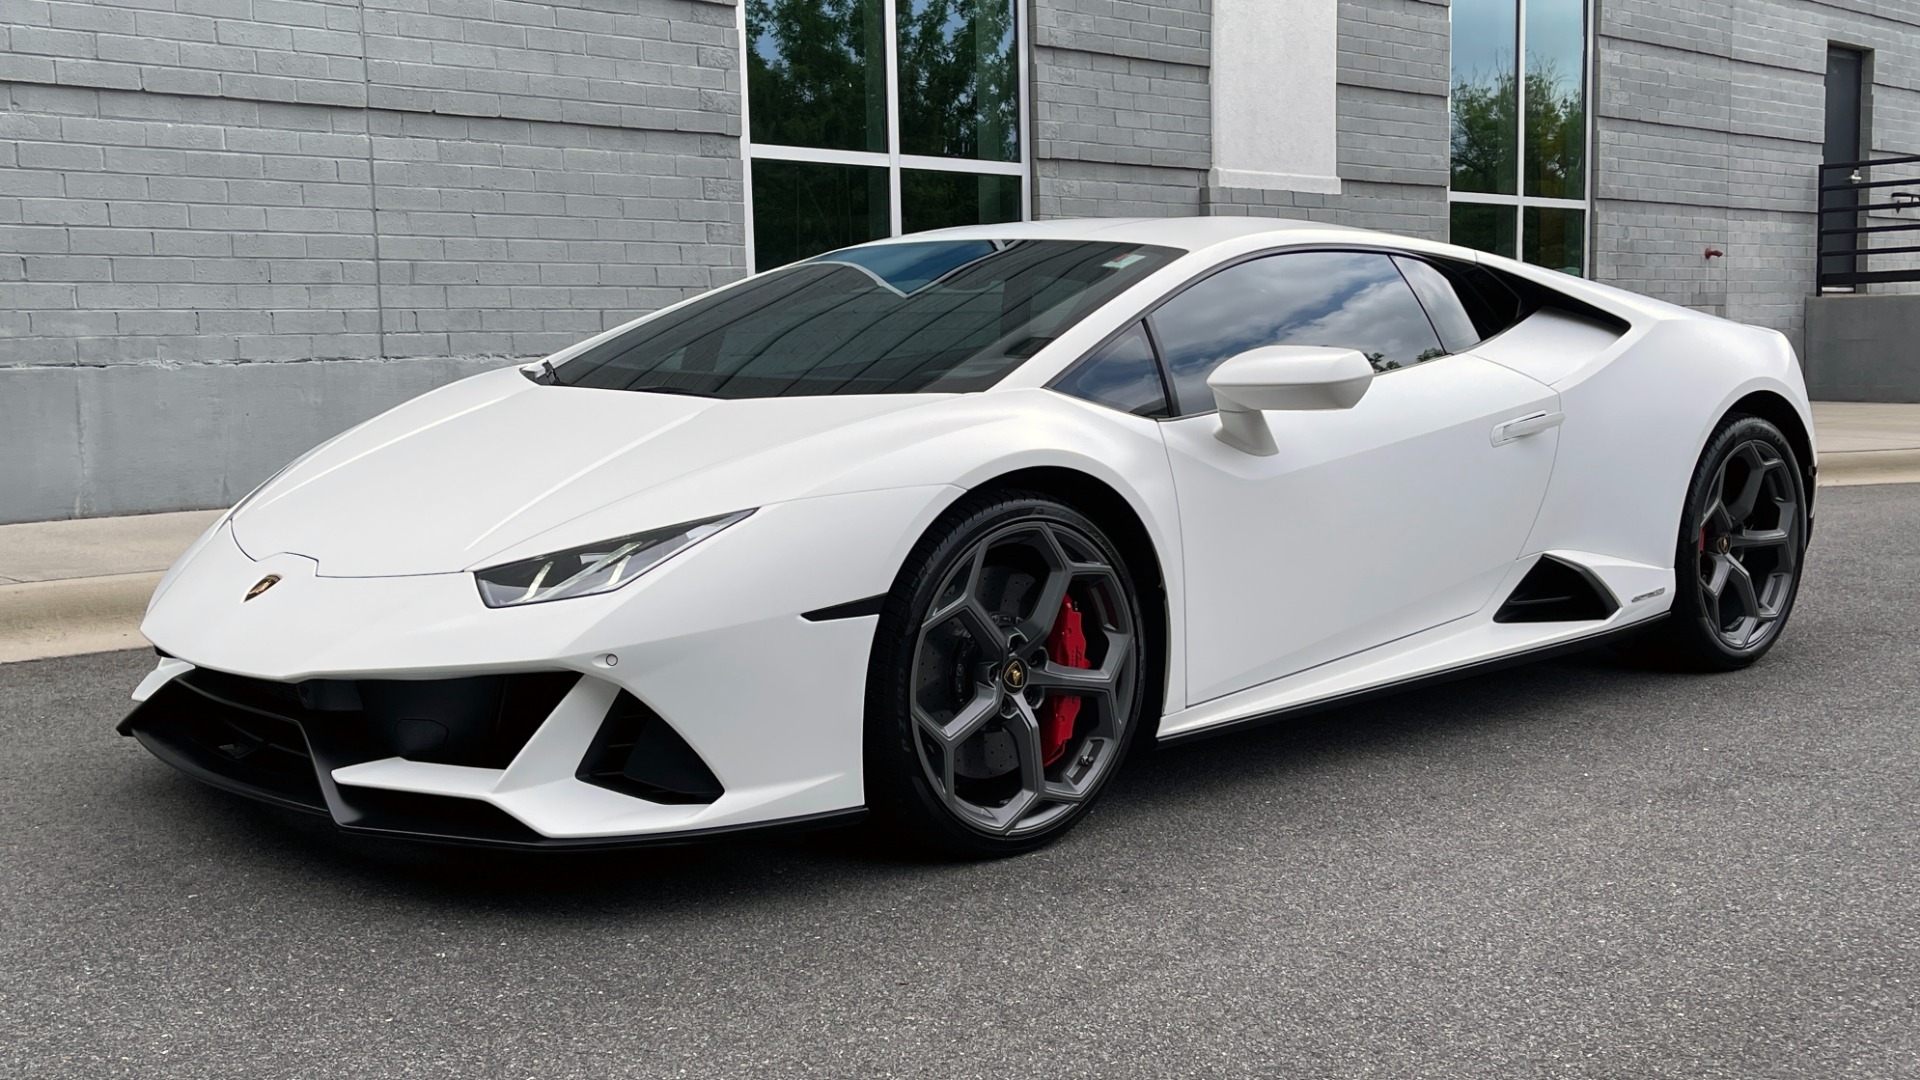 Used 2020 Lamborghini HURACAN EVO LP640-4 5.2L V10 630HP / 7-SPD AUTO / AWD / NAVIGATION / CAMERA for sale $339,000 at Formula Imports in Charlotte NC 28227 2